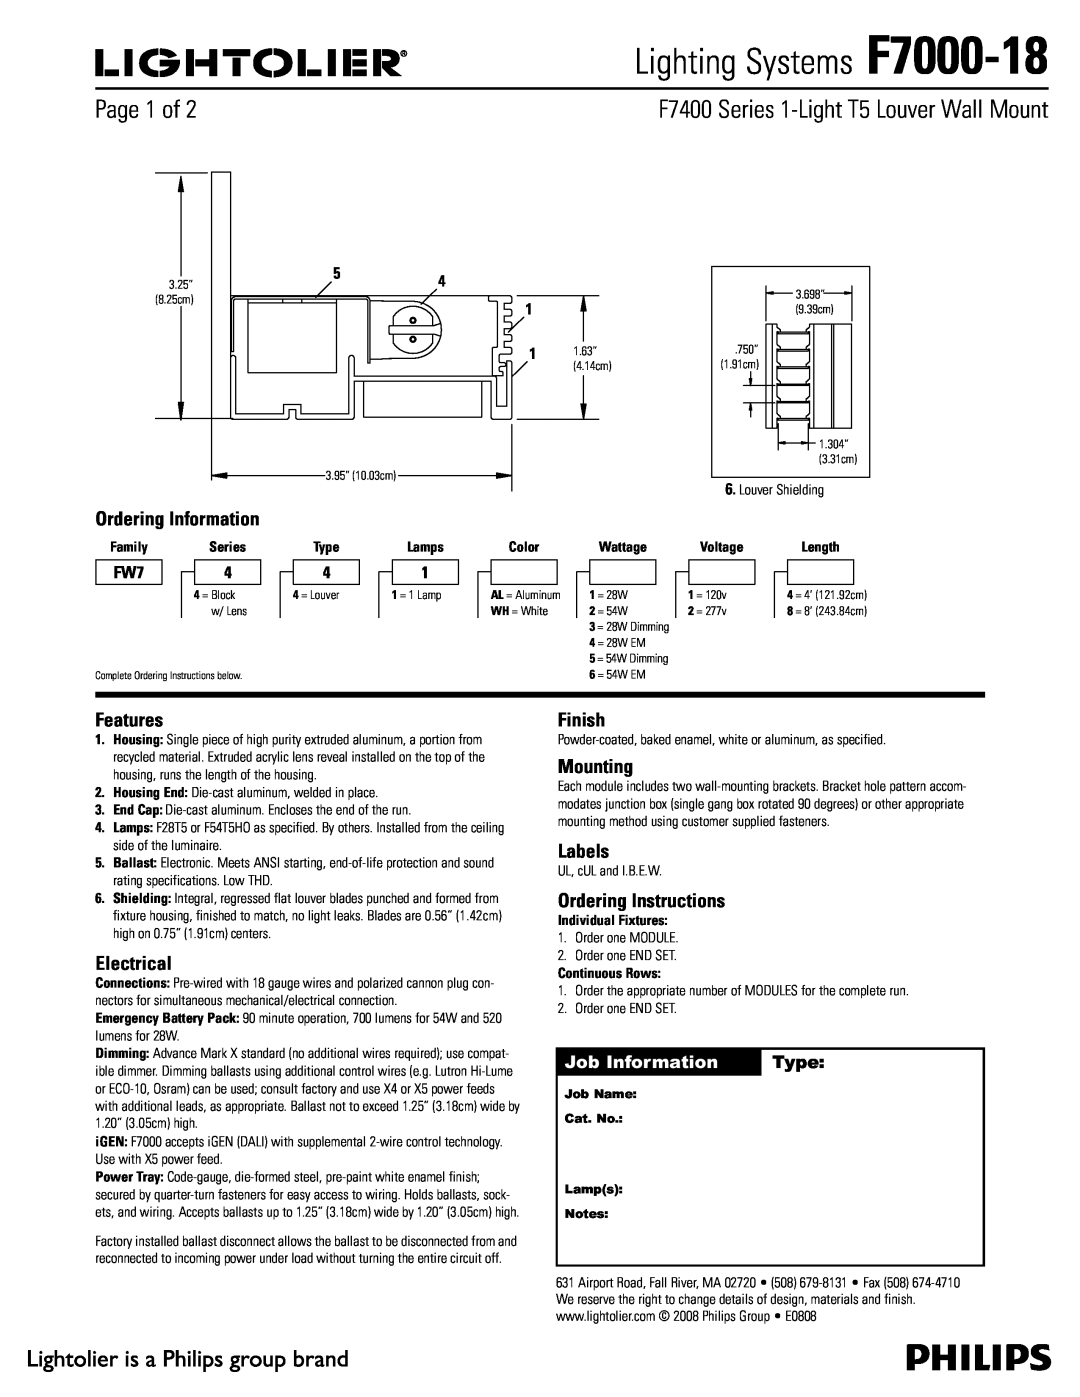 Lightolier specifications Lighting Systems F7000-18, Job Information, Type, 4FSJFT-JHIU5-PVWFS8BMM.PVOU 